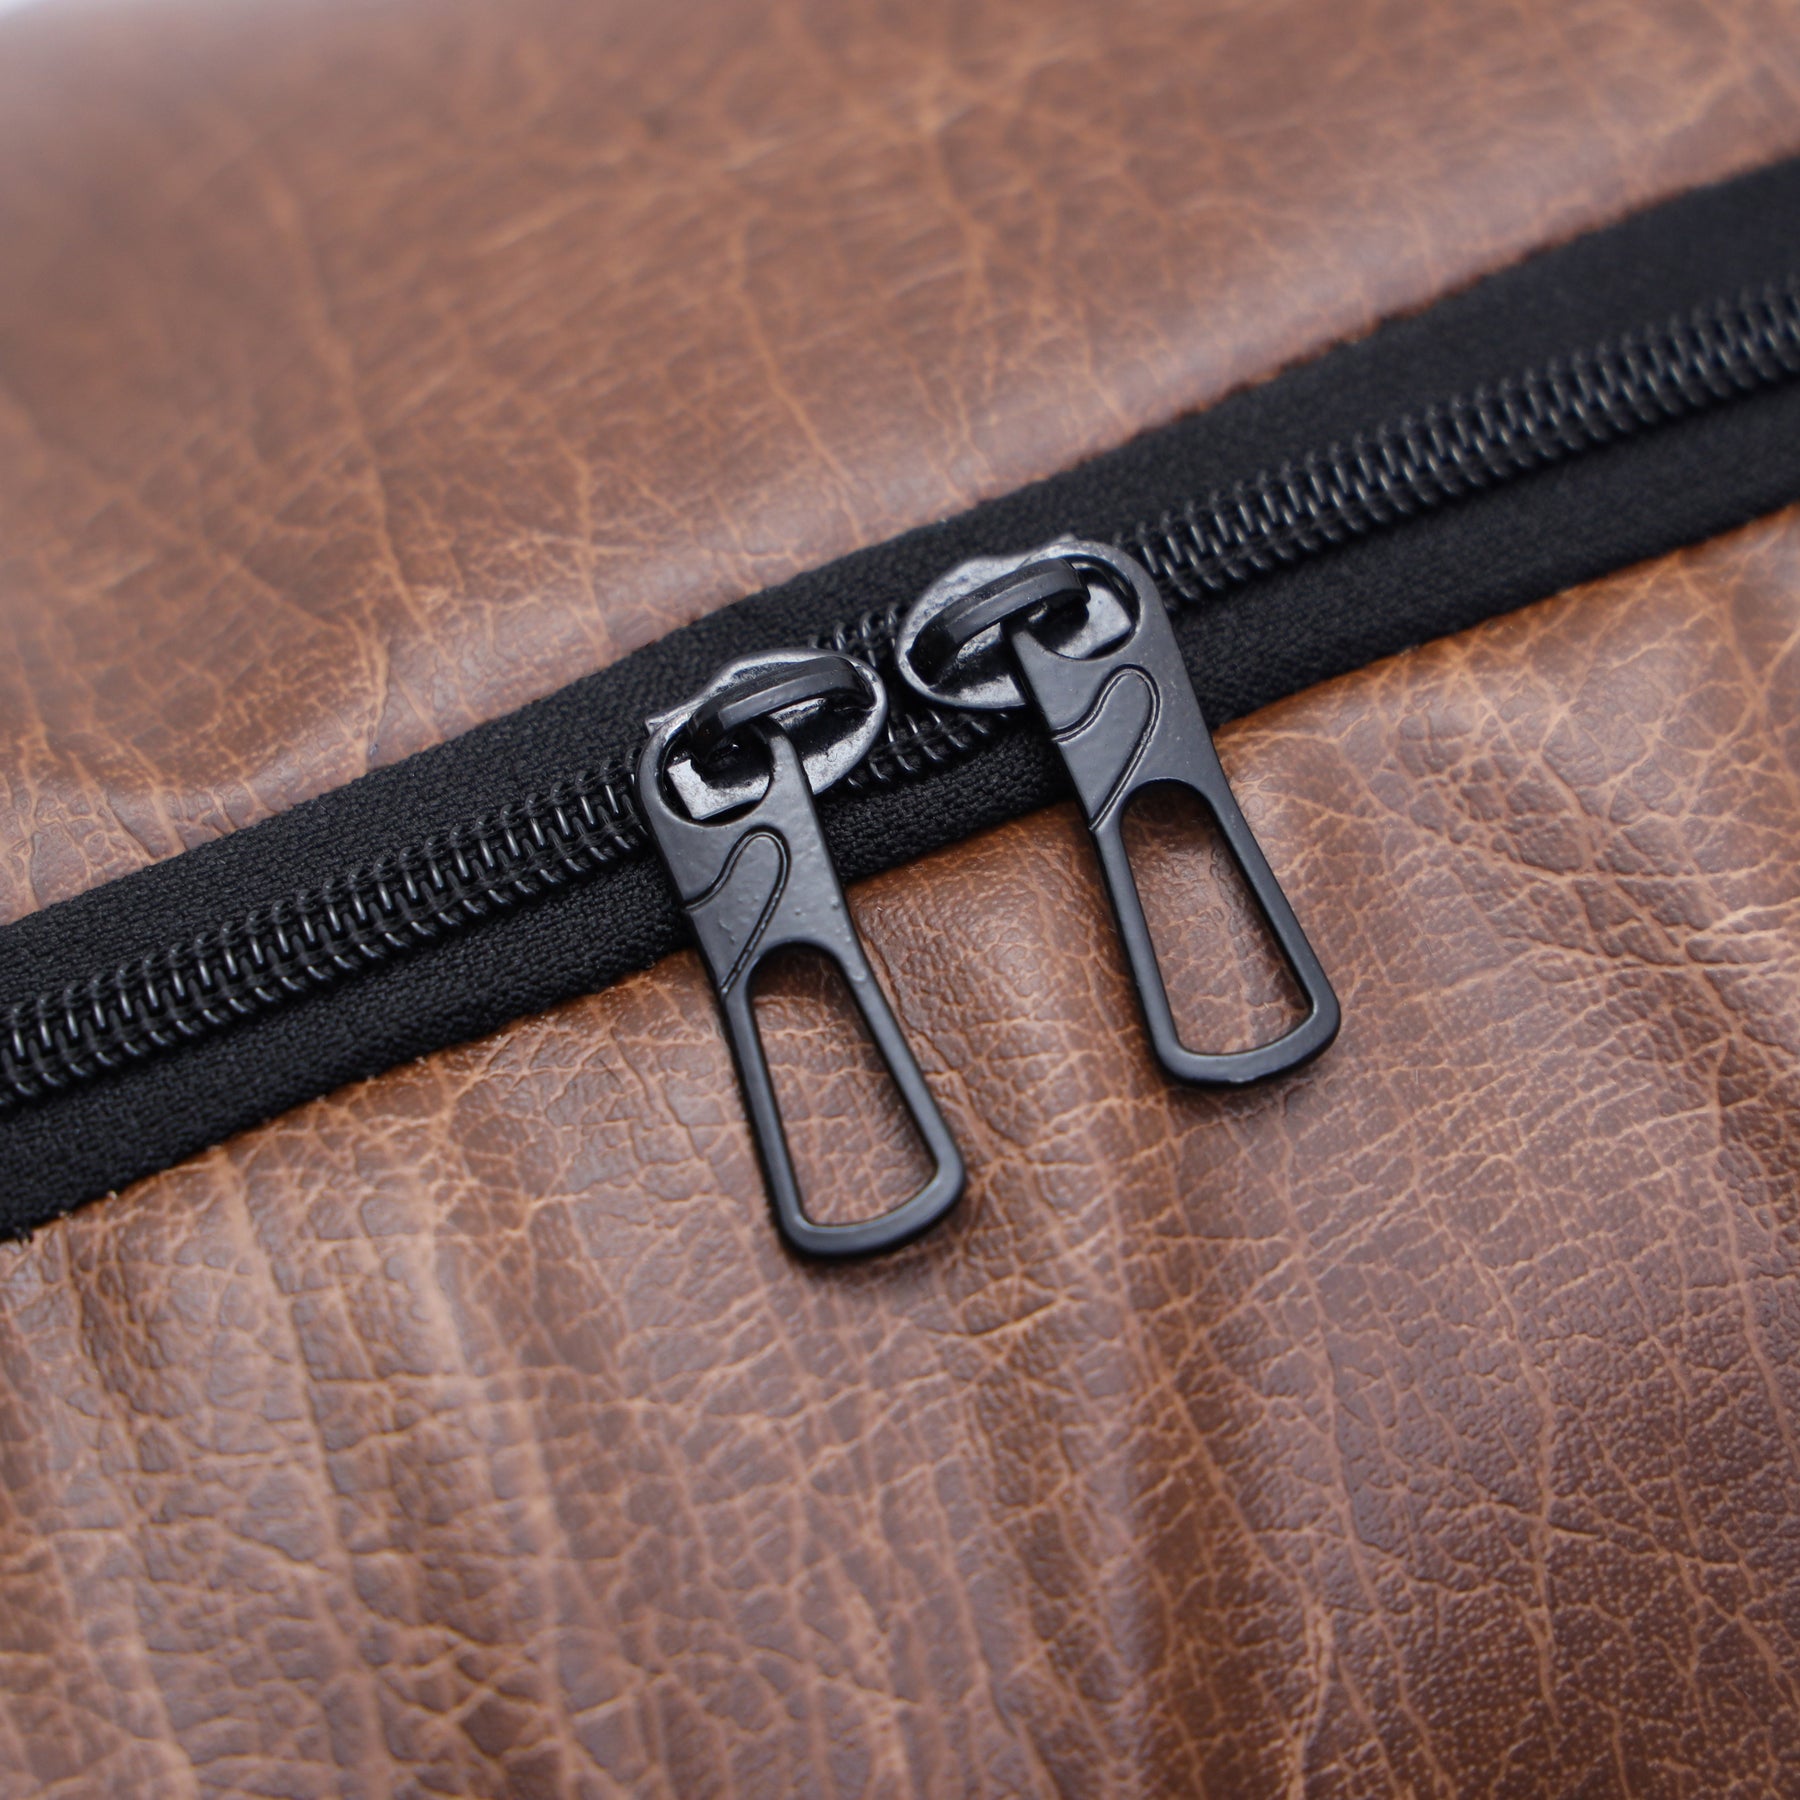 (⭐⭐ HOT SALE NOW) Garment Duffle - A Premium Leather Weekender + Free Crossbody Bag